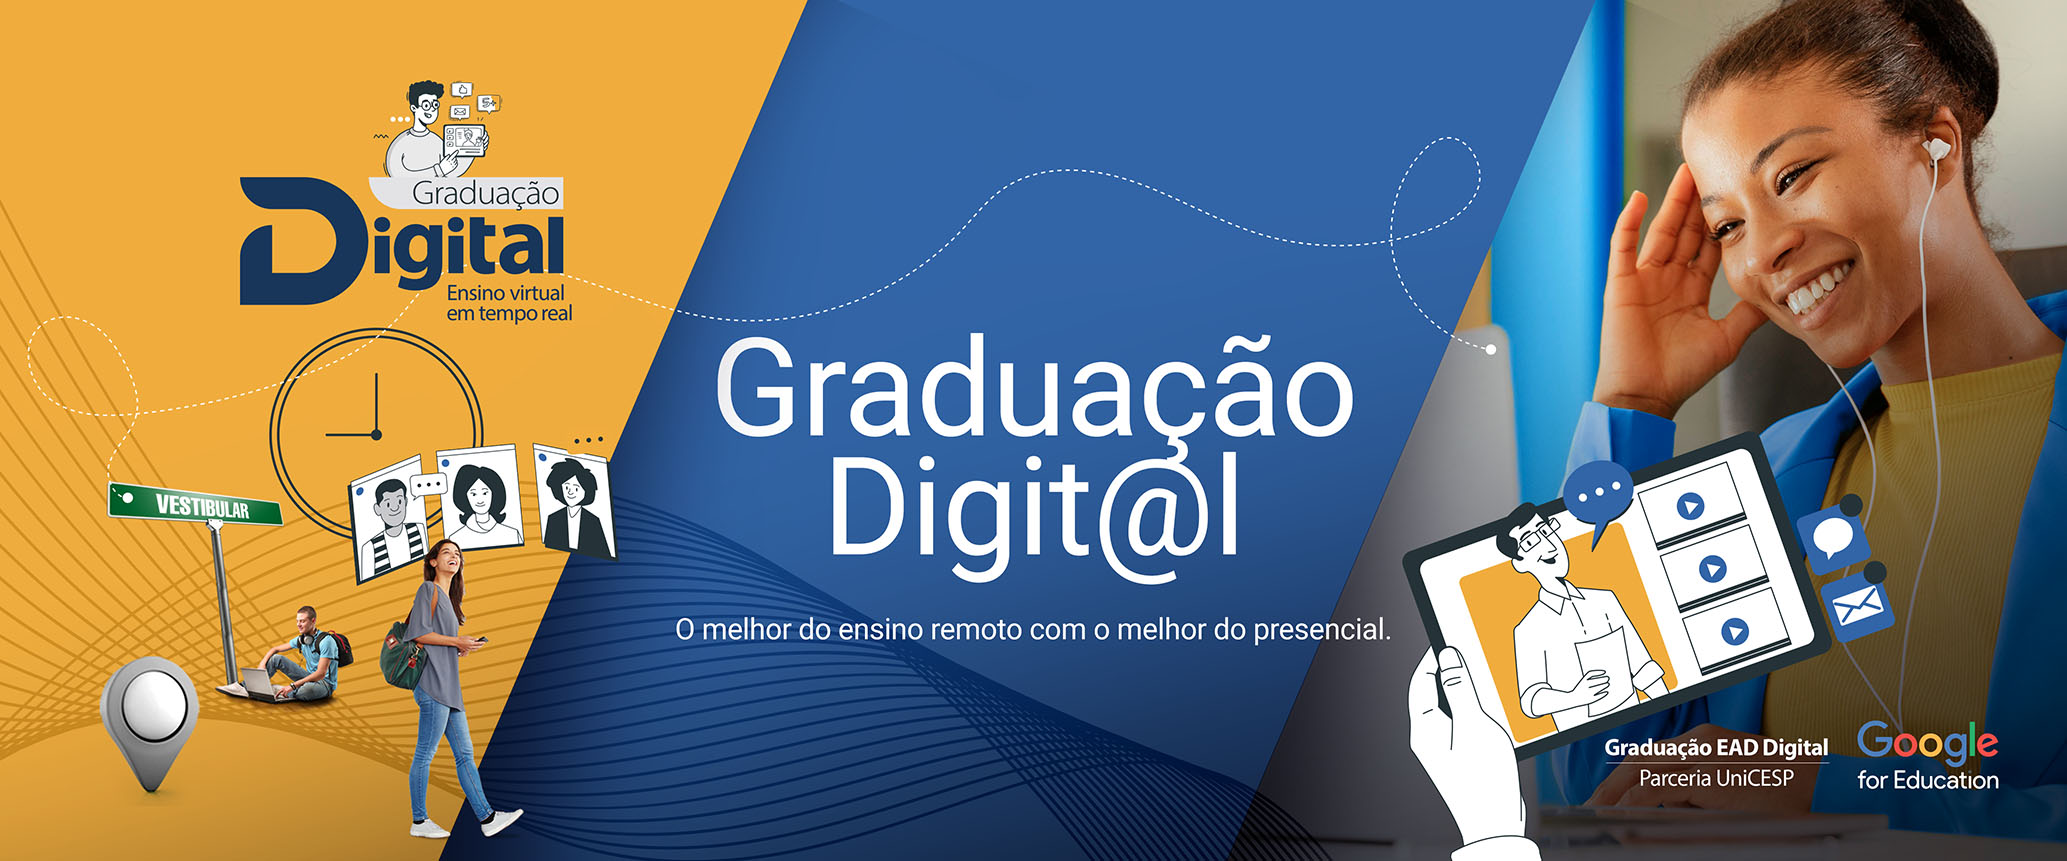 graduacao_digital_slide_home_NEUTRO-1